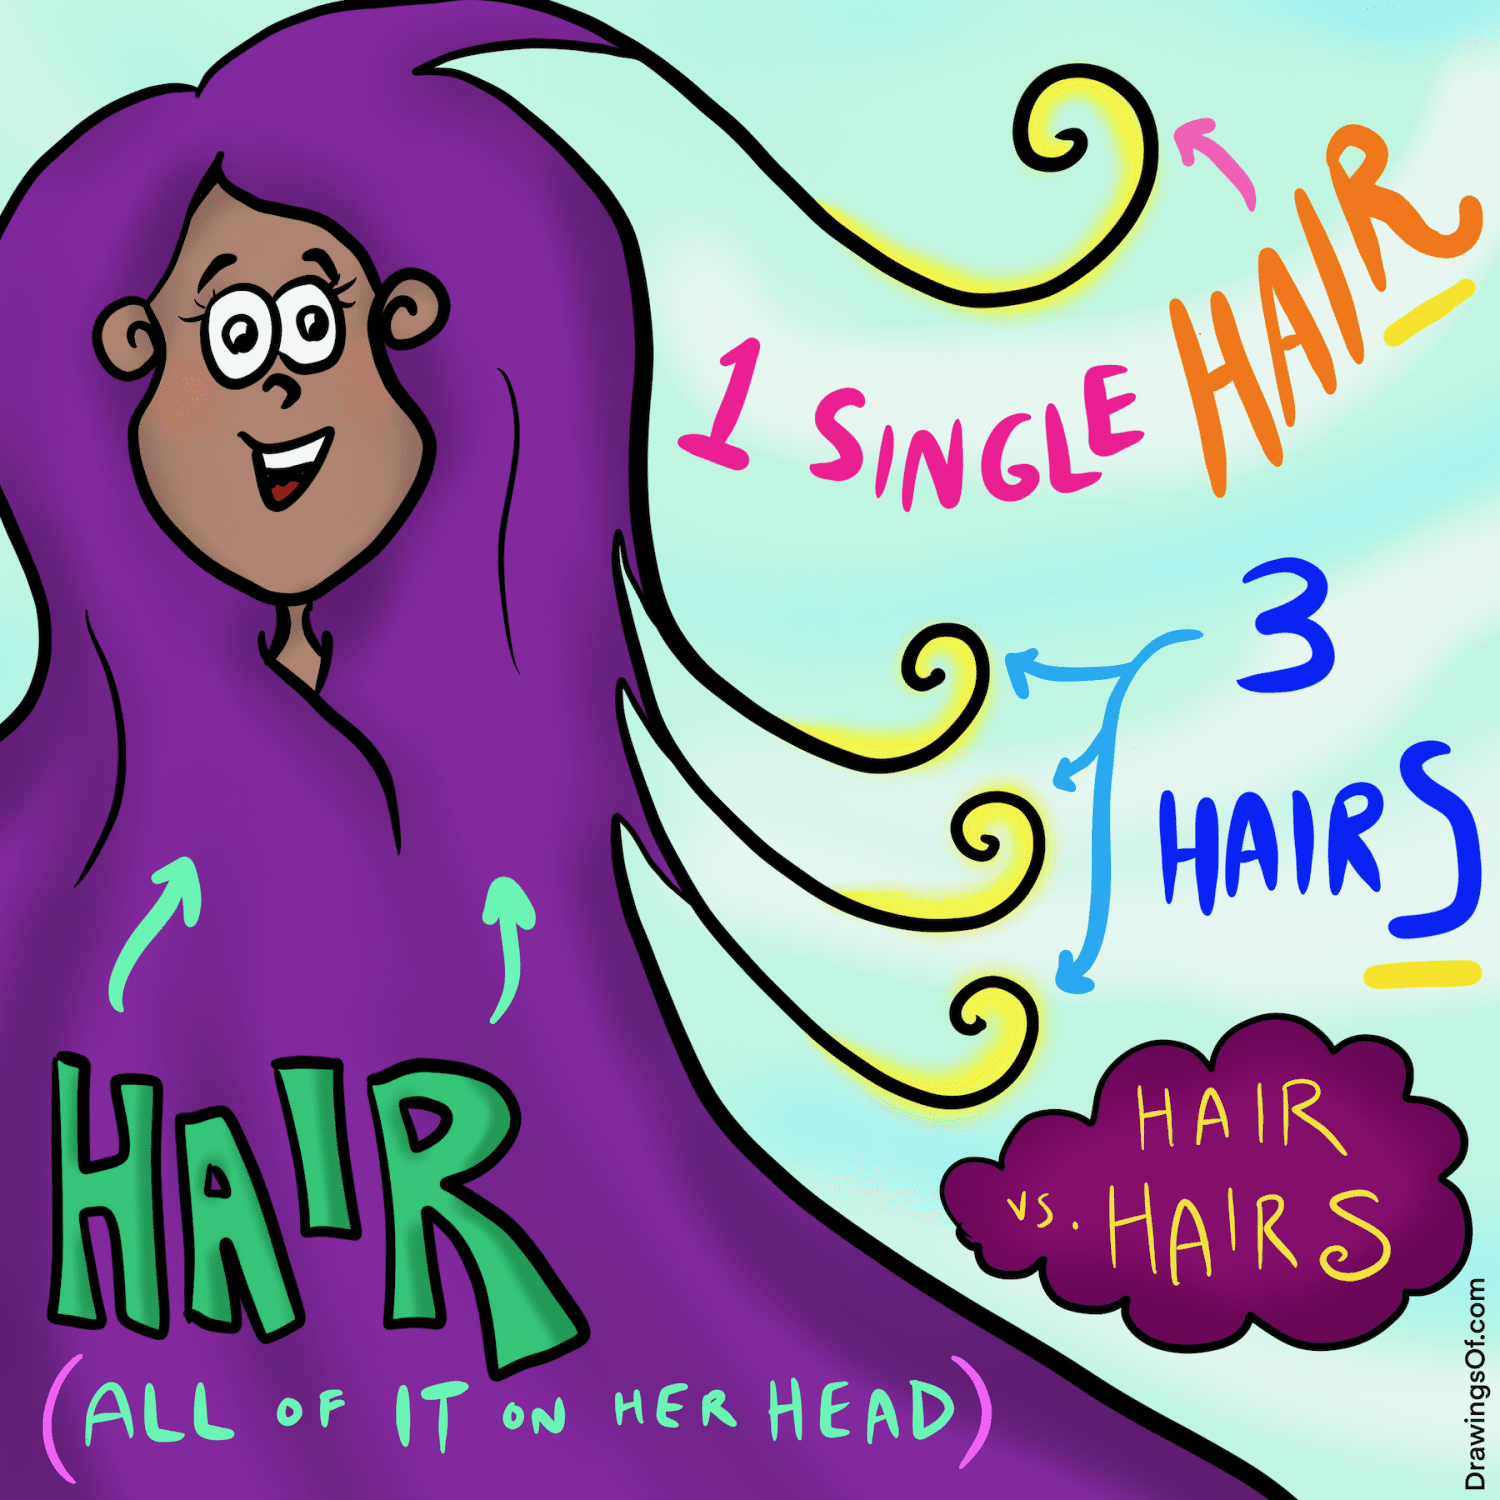 Hair or Hairs?